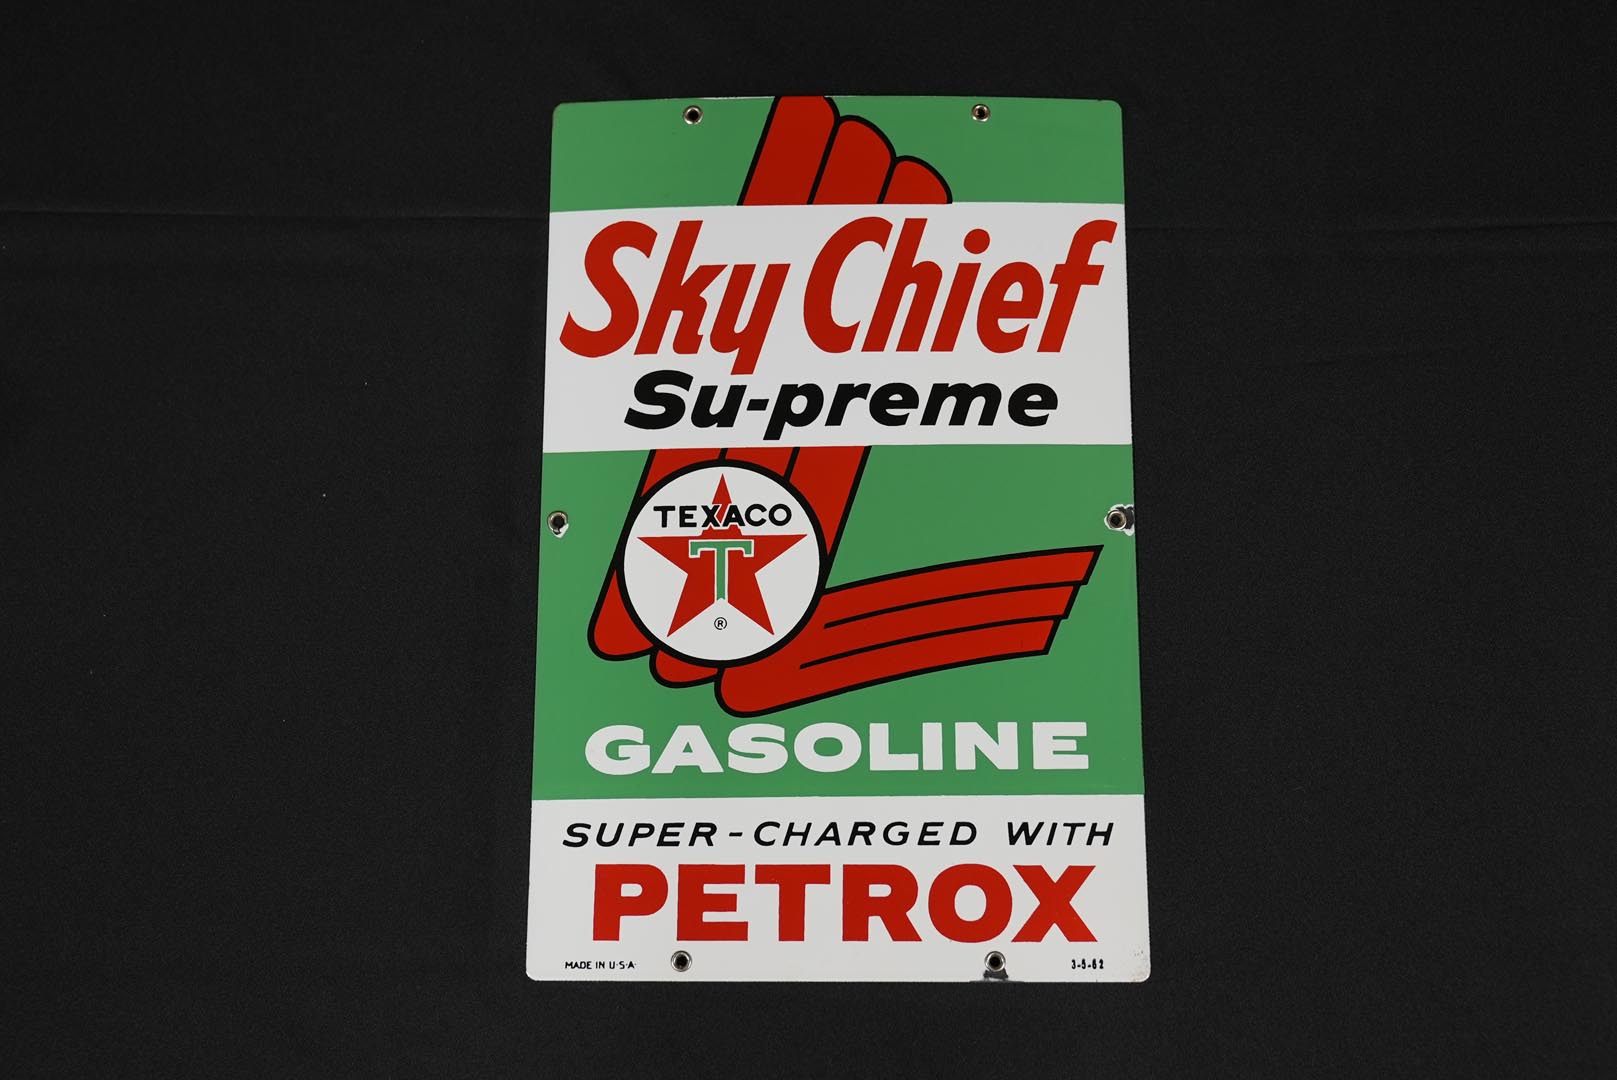  Texaco Sky Chief Supreme SSP P ump Plate 